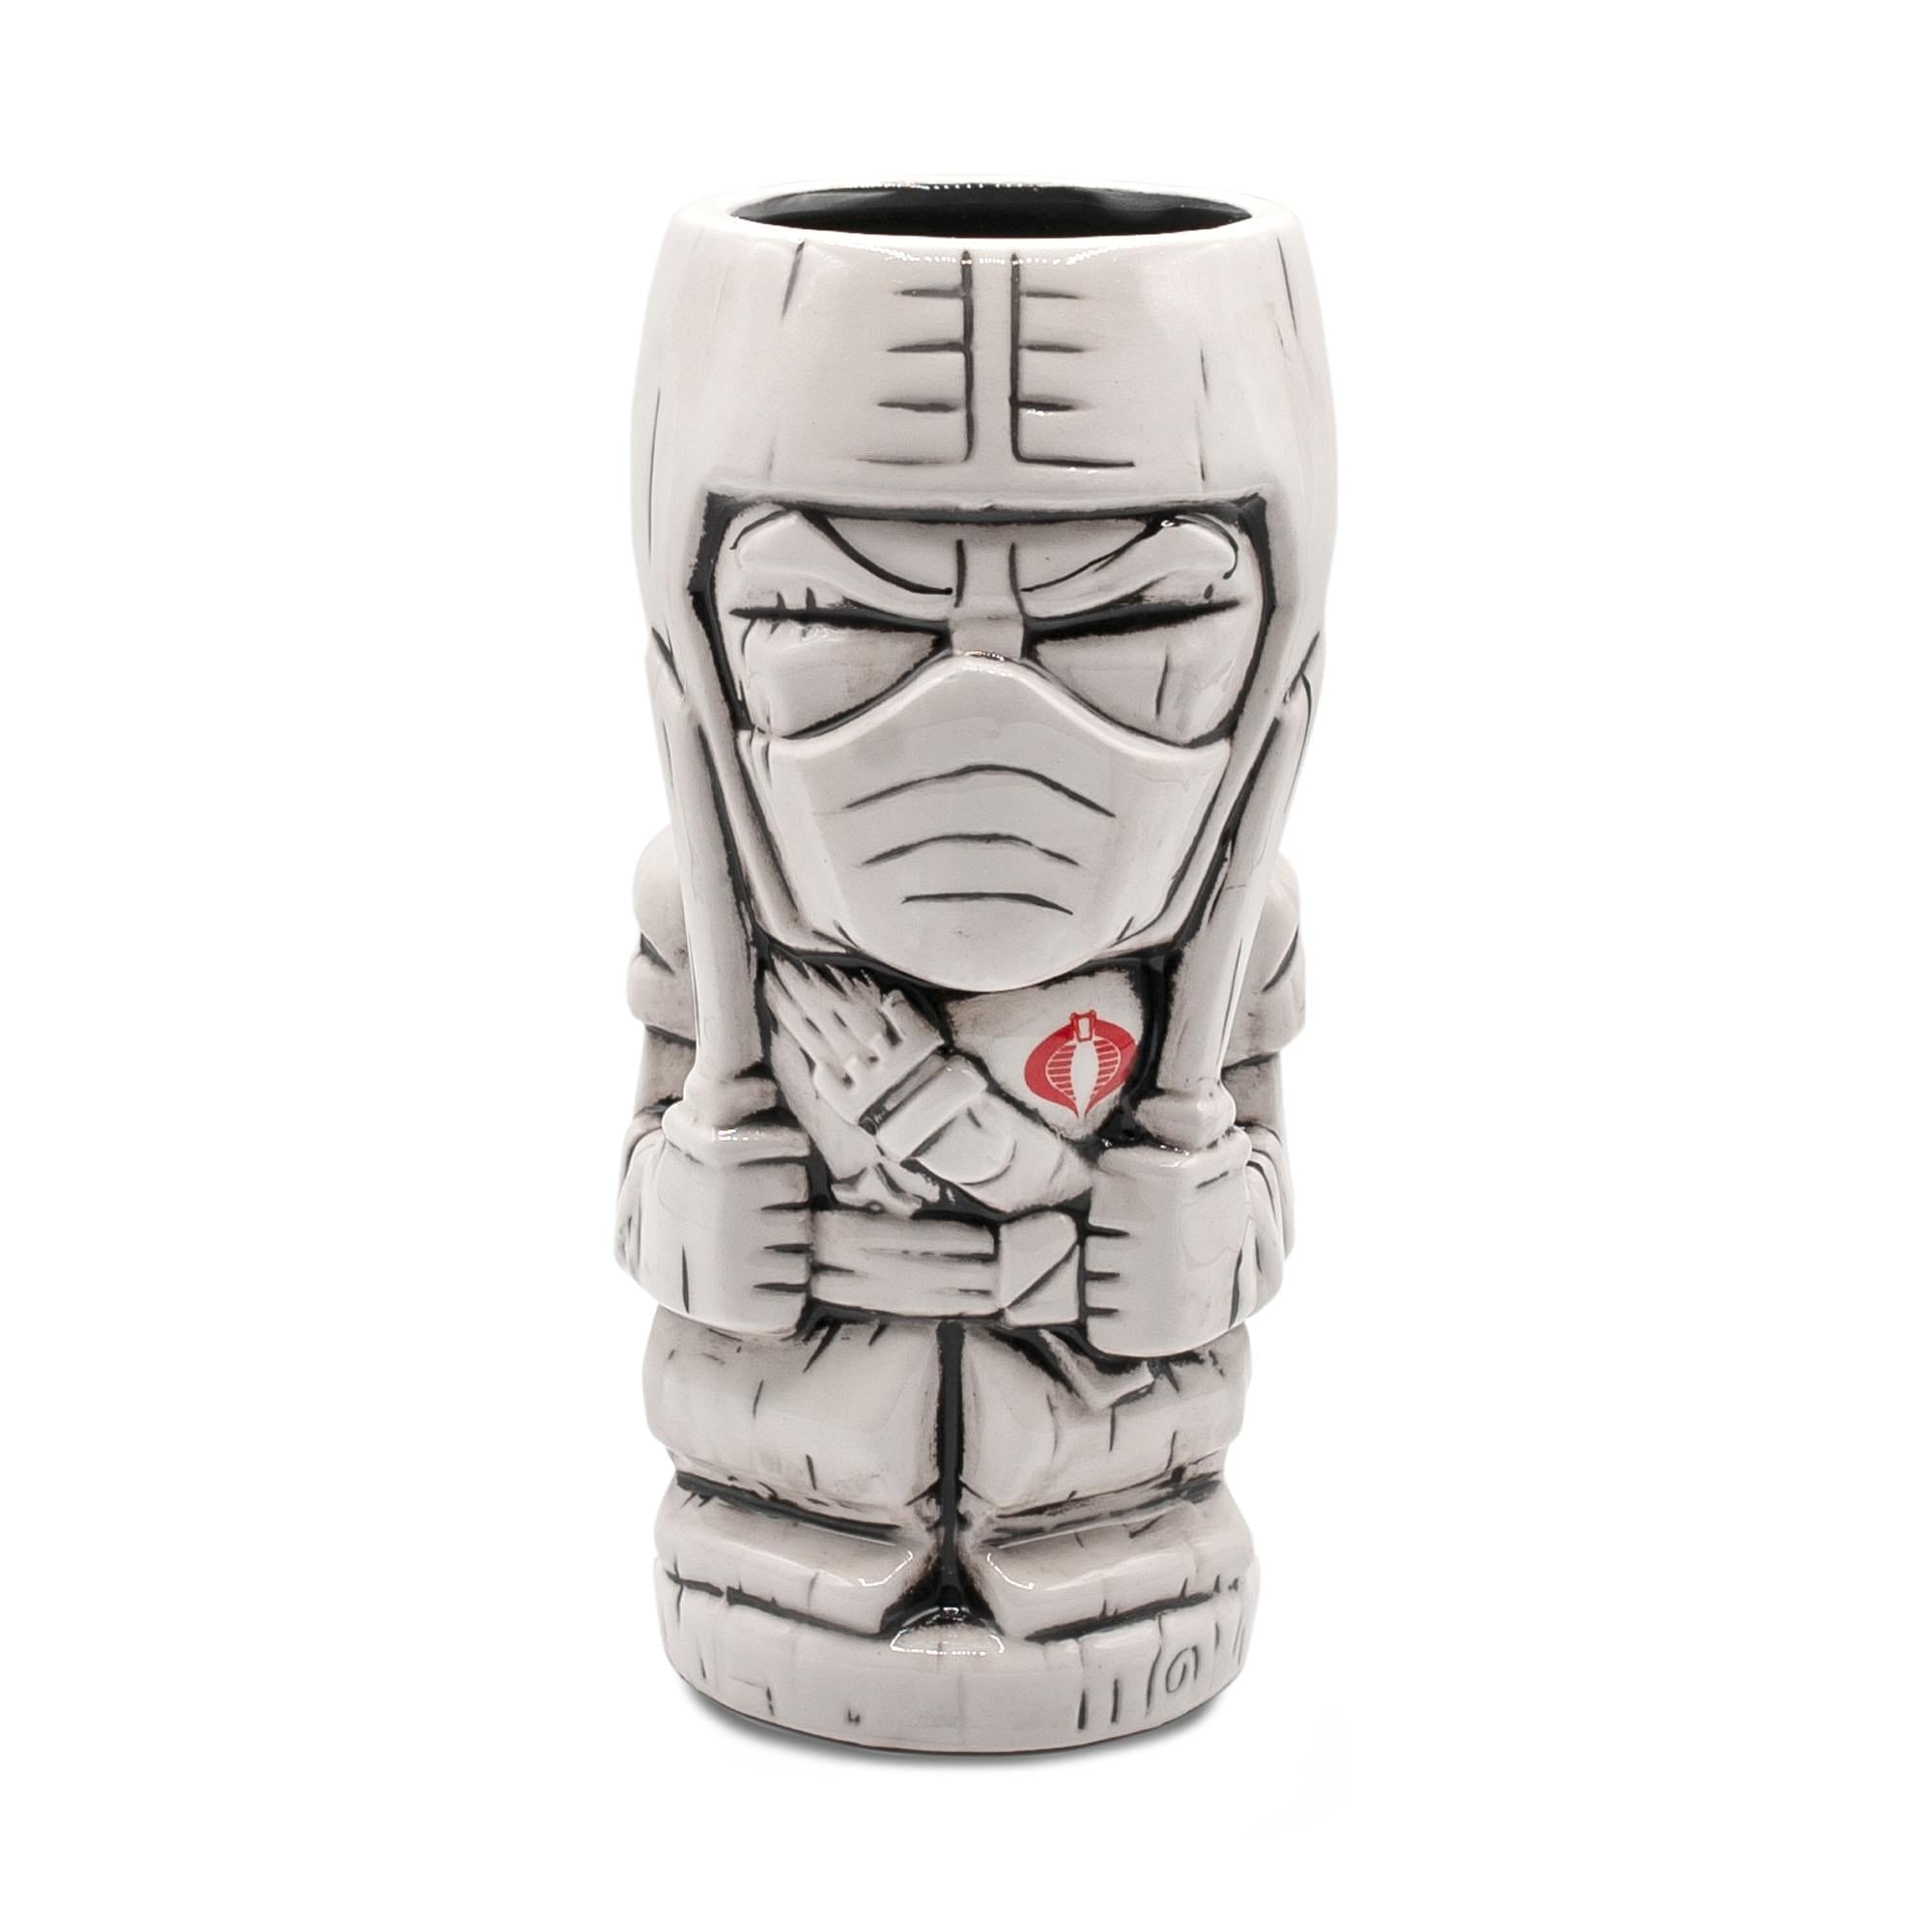 Geeki Tikis G.I. Joe Storm Shadow Ceramic Mug , Holds 16 Ounces